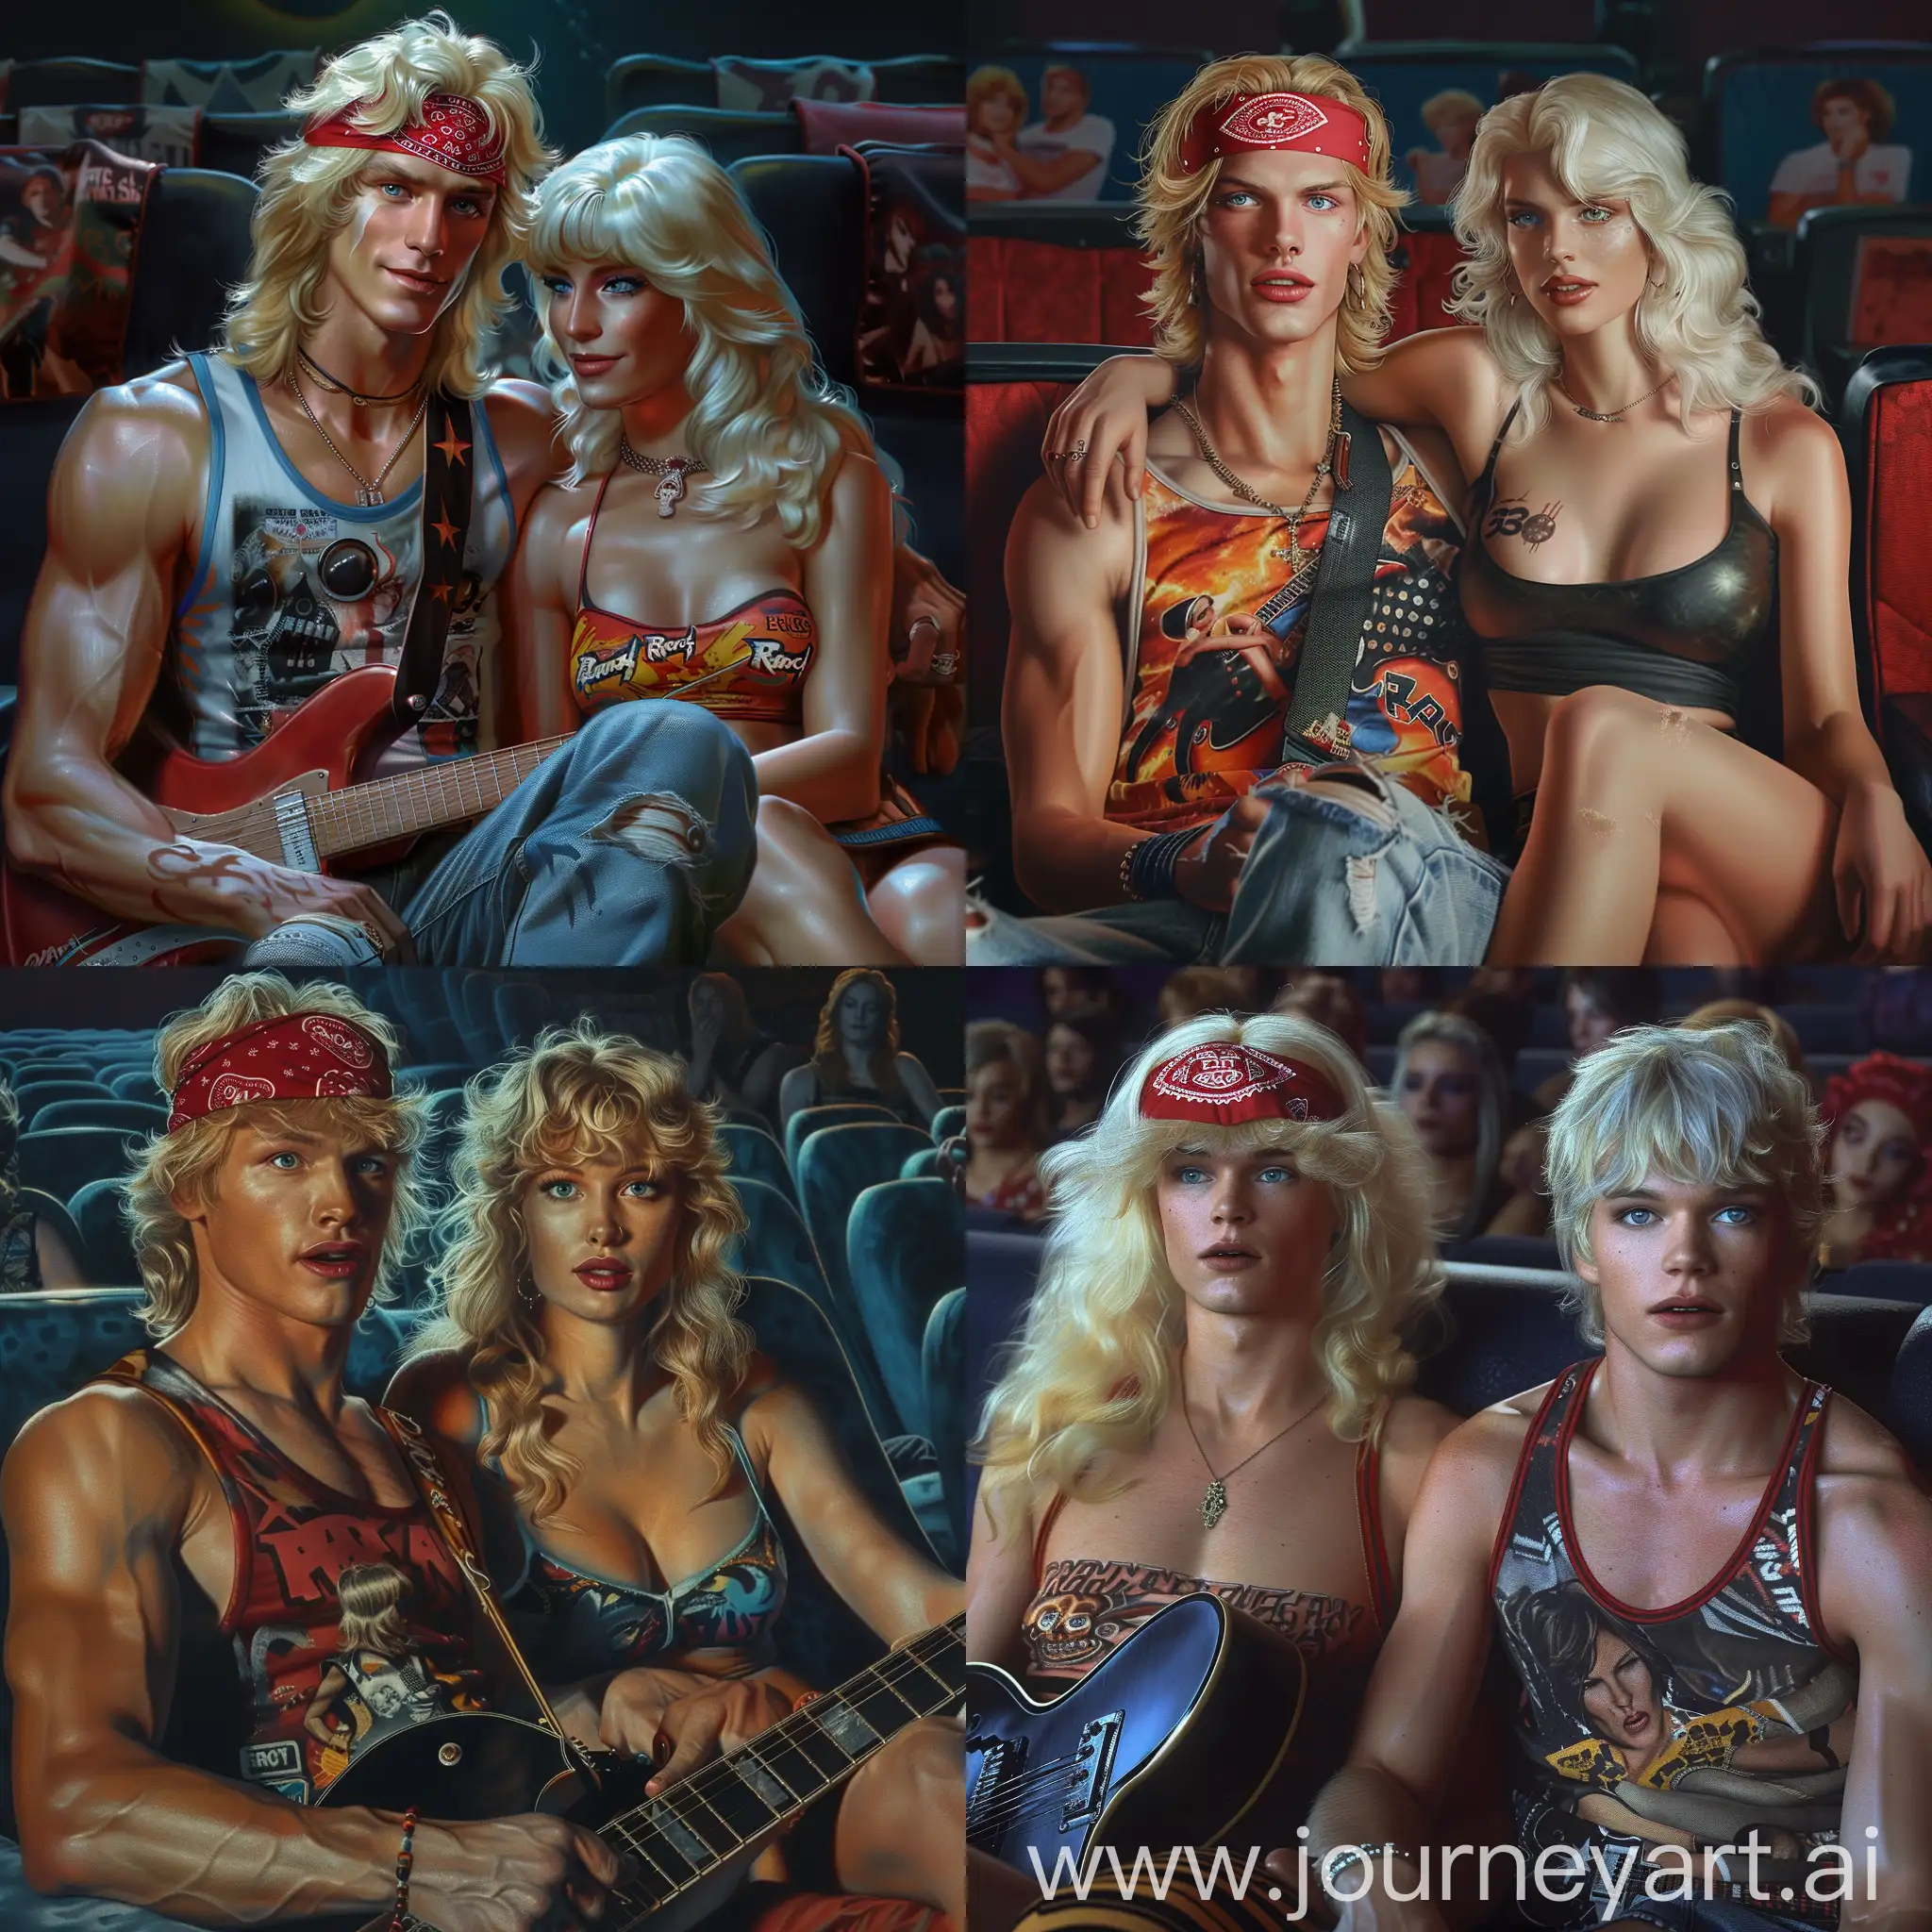 80s-Couple-Watching-Hard-Rock-Movie-in-Photorealistic-Cinema-Scene